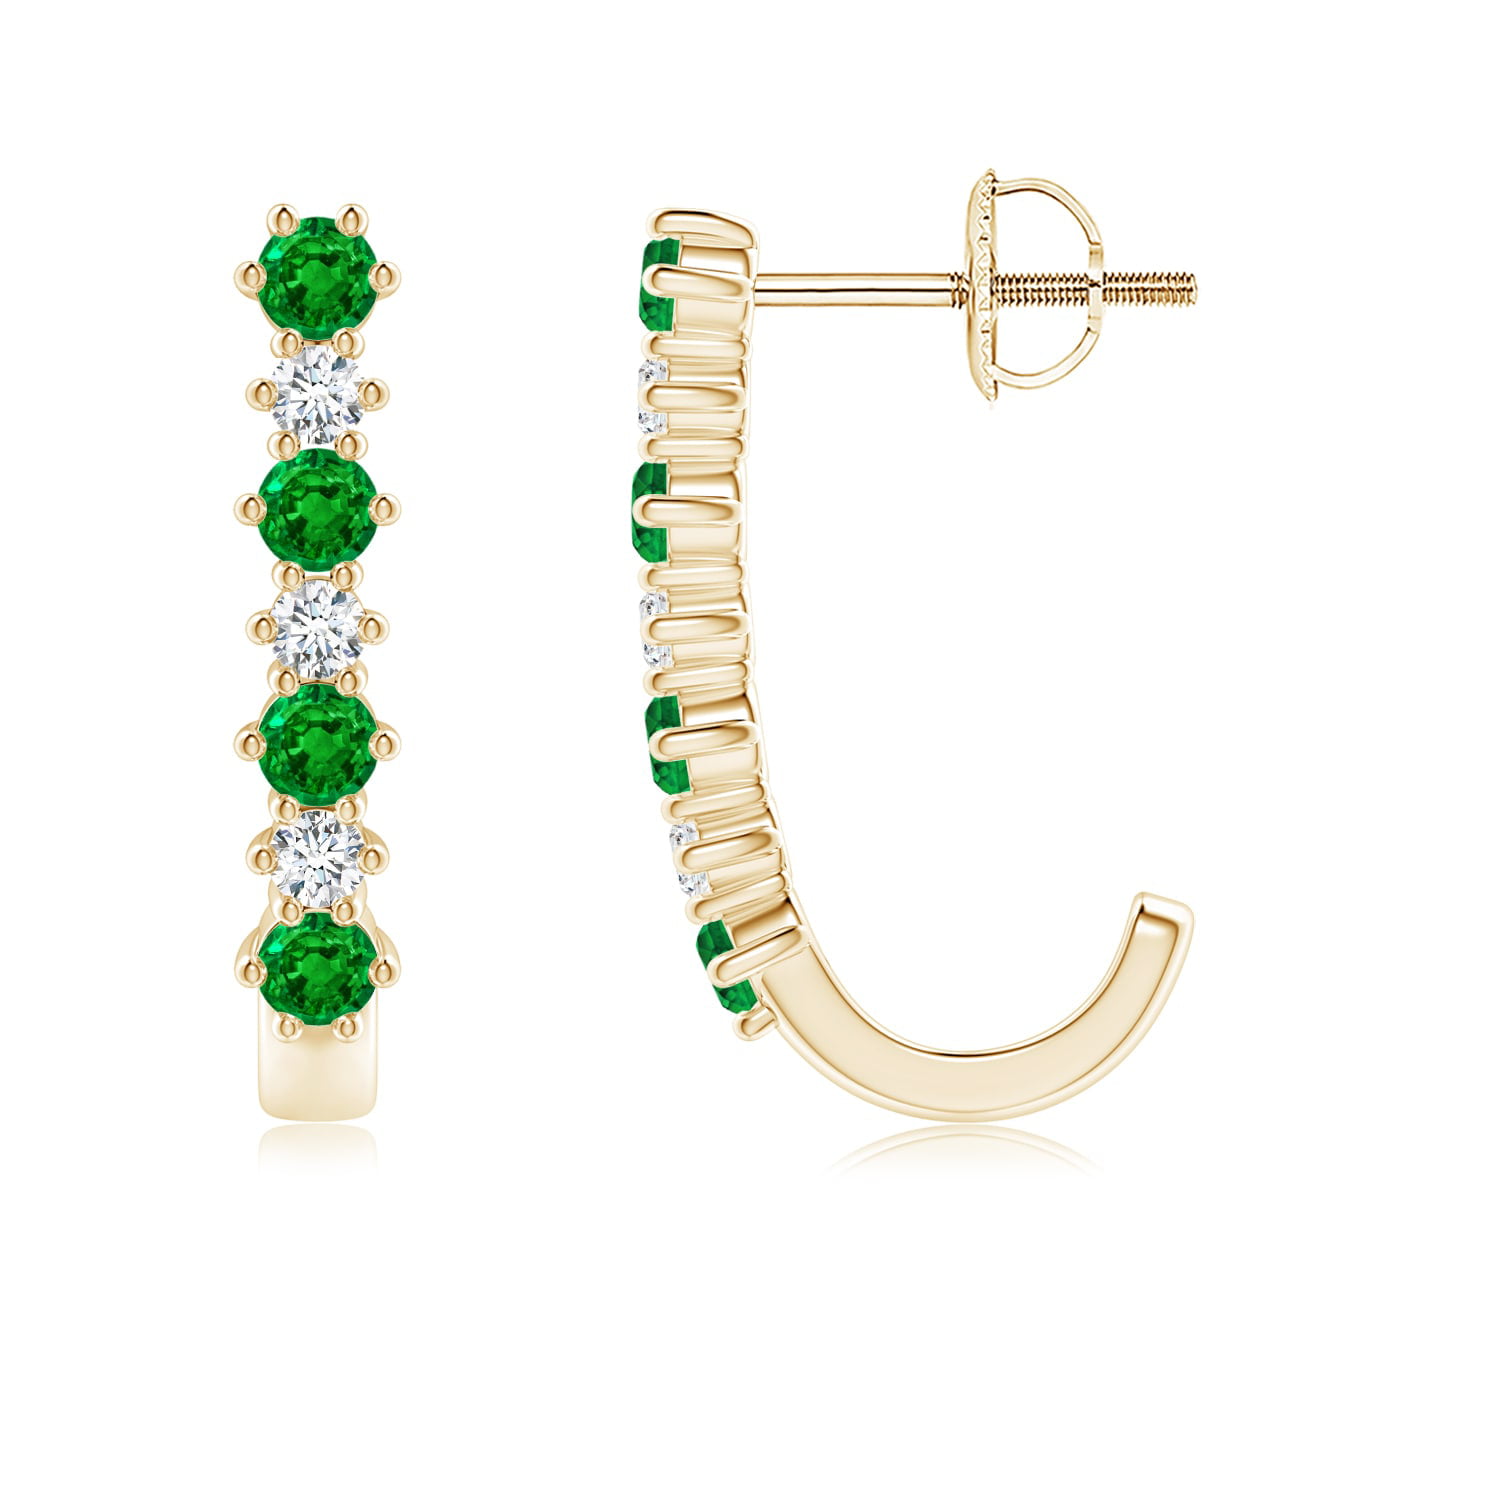 0.5 Carat May Birthstone Jewelry - Emerald and Diamond J-Hoop Earrings ...